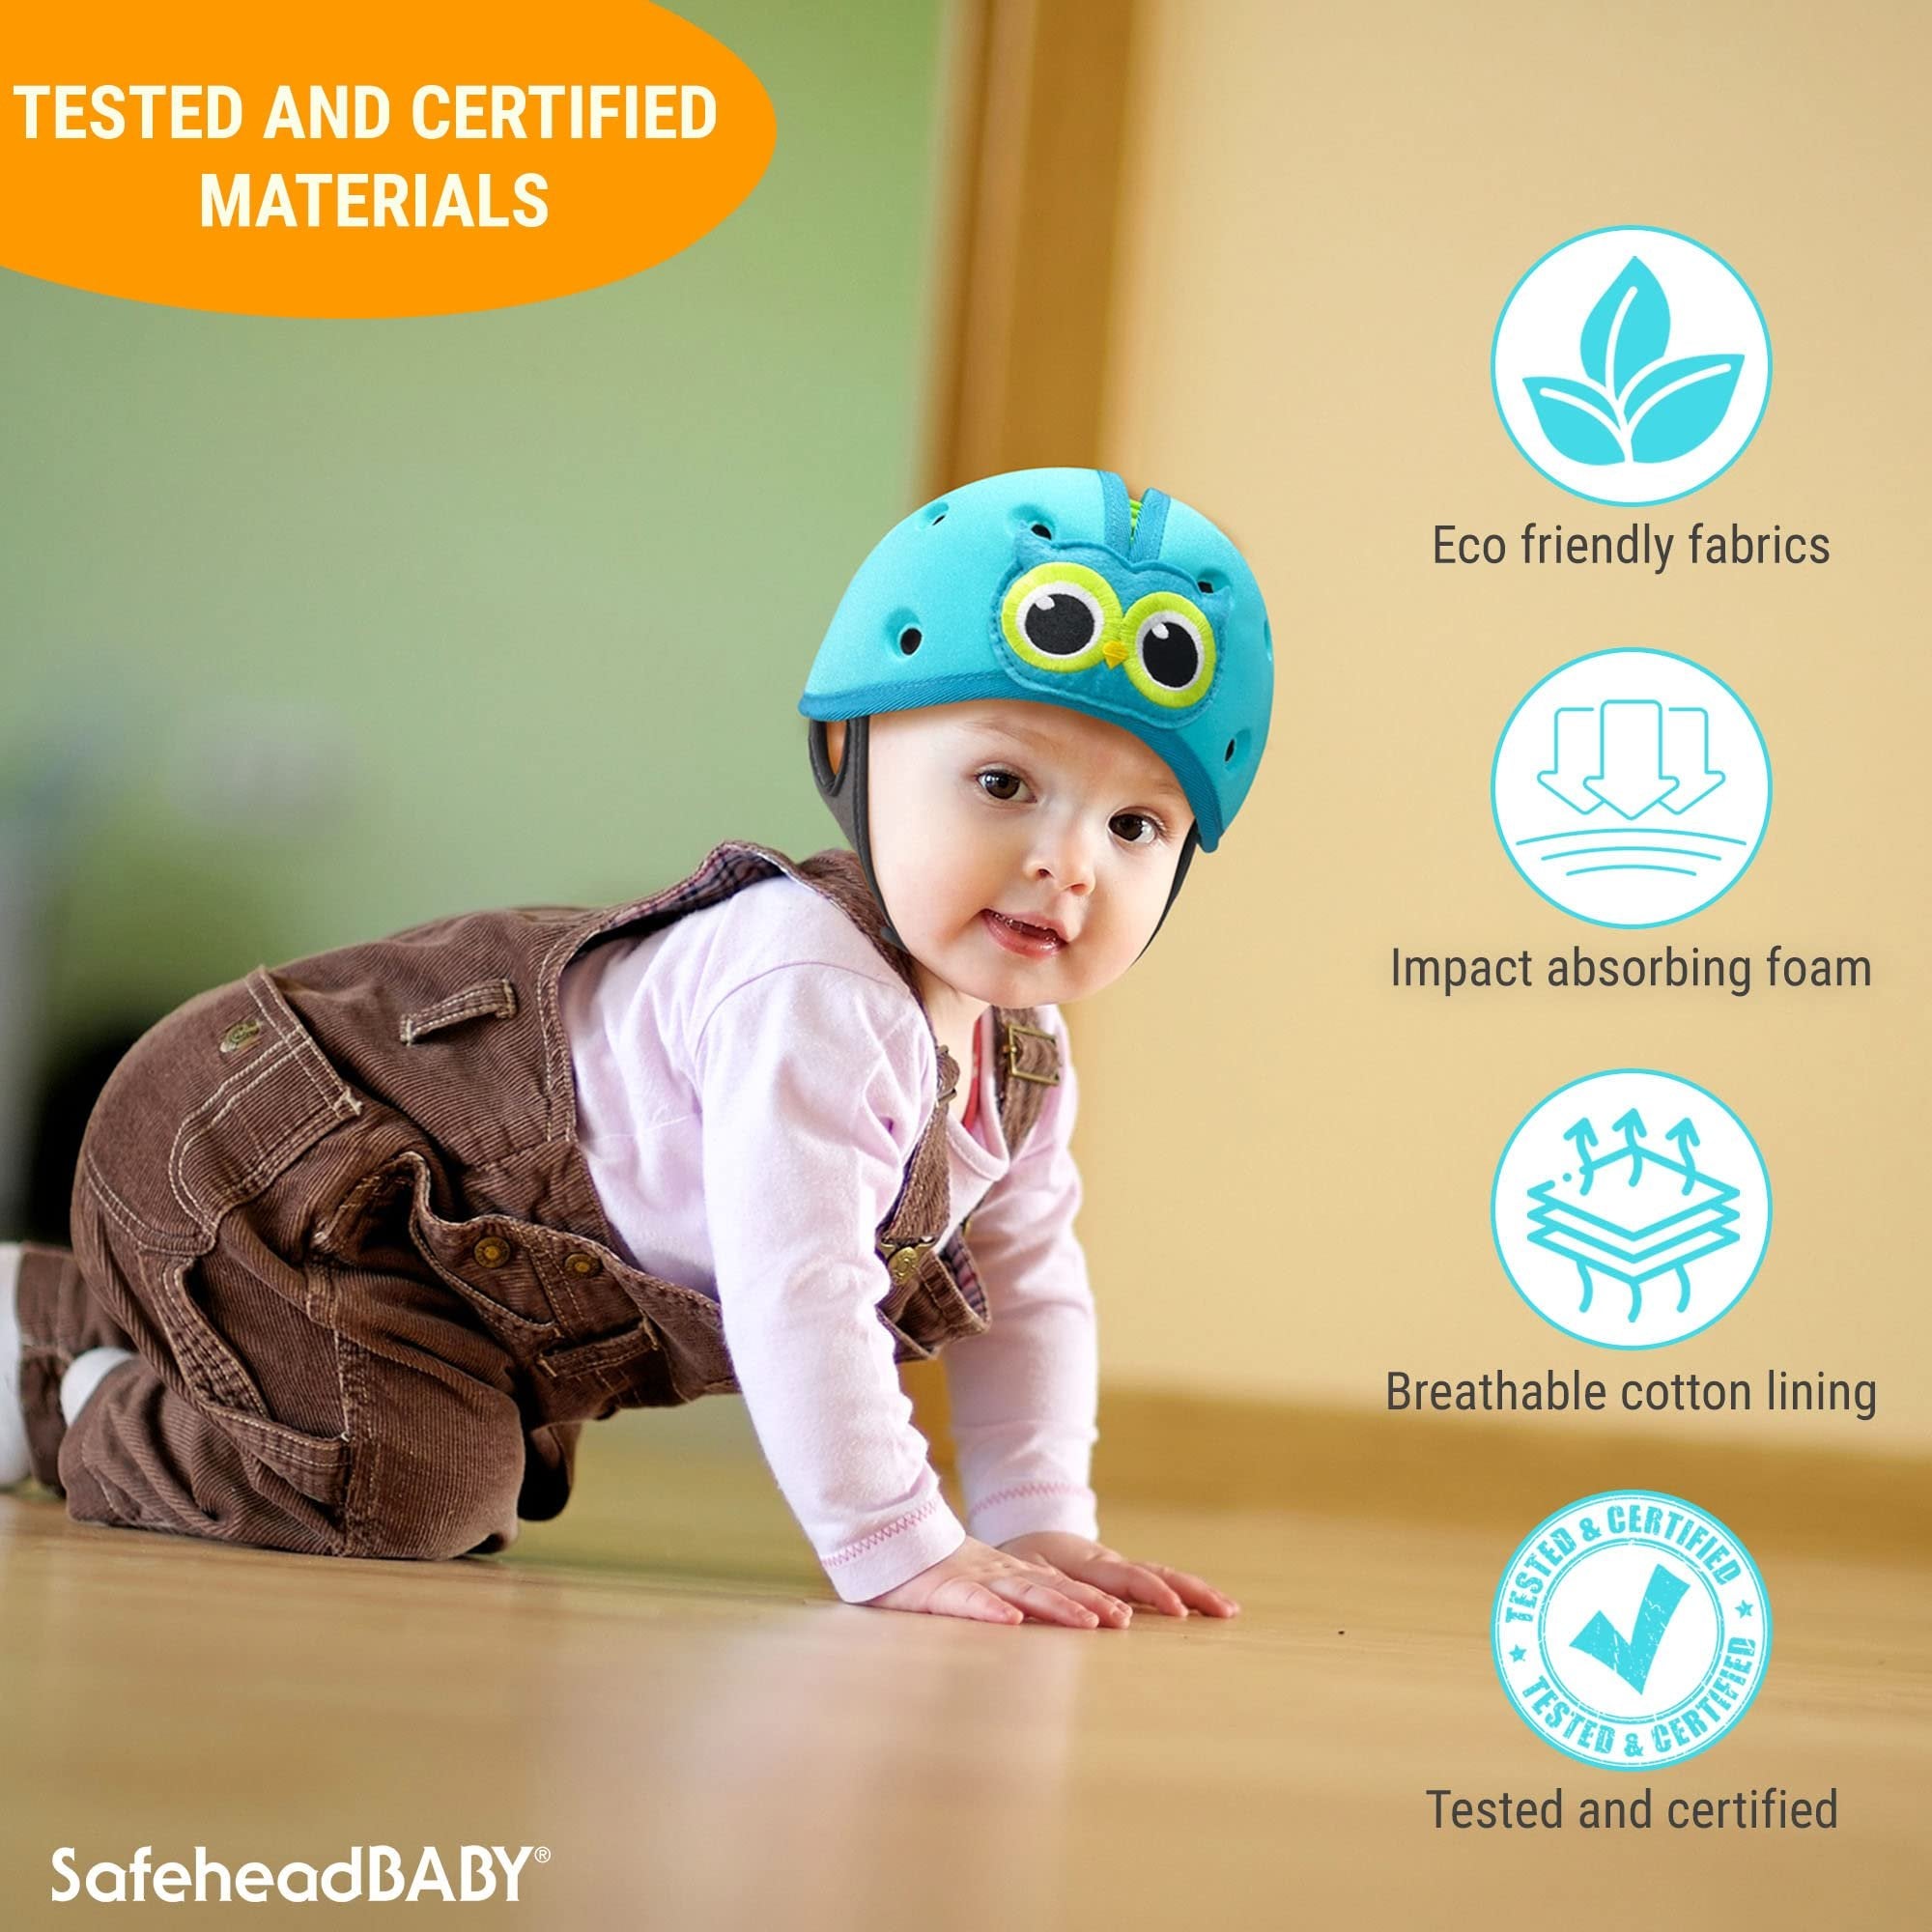 SafeheadBaby Infant Safety Helmet - Cars Orange, Adjustable & Lightweight (One Size)